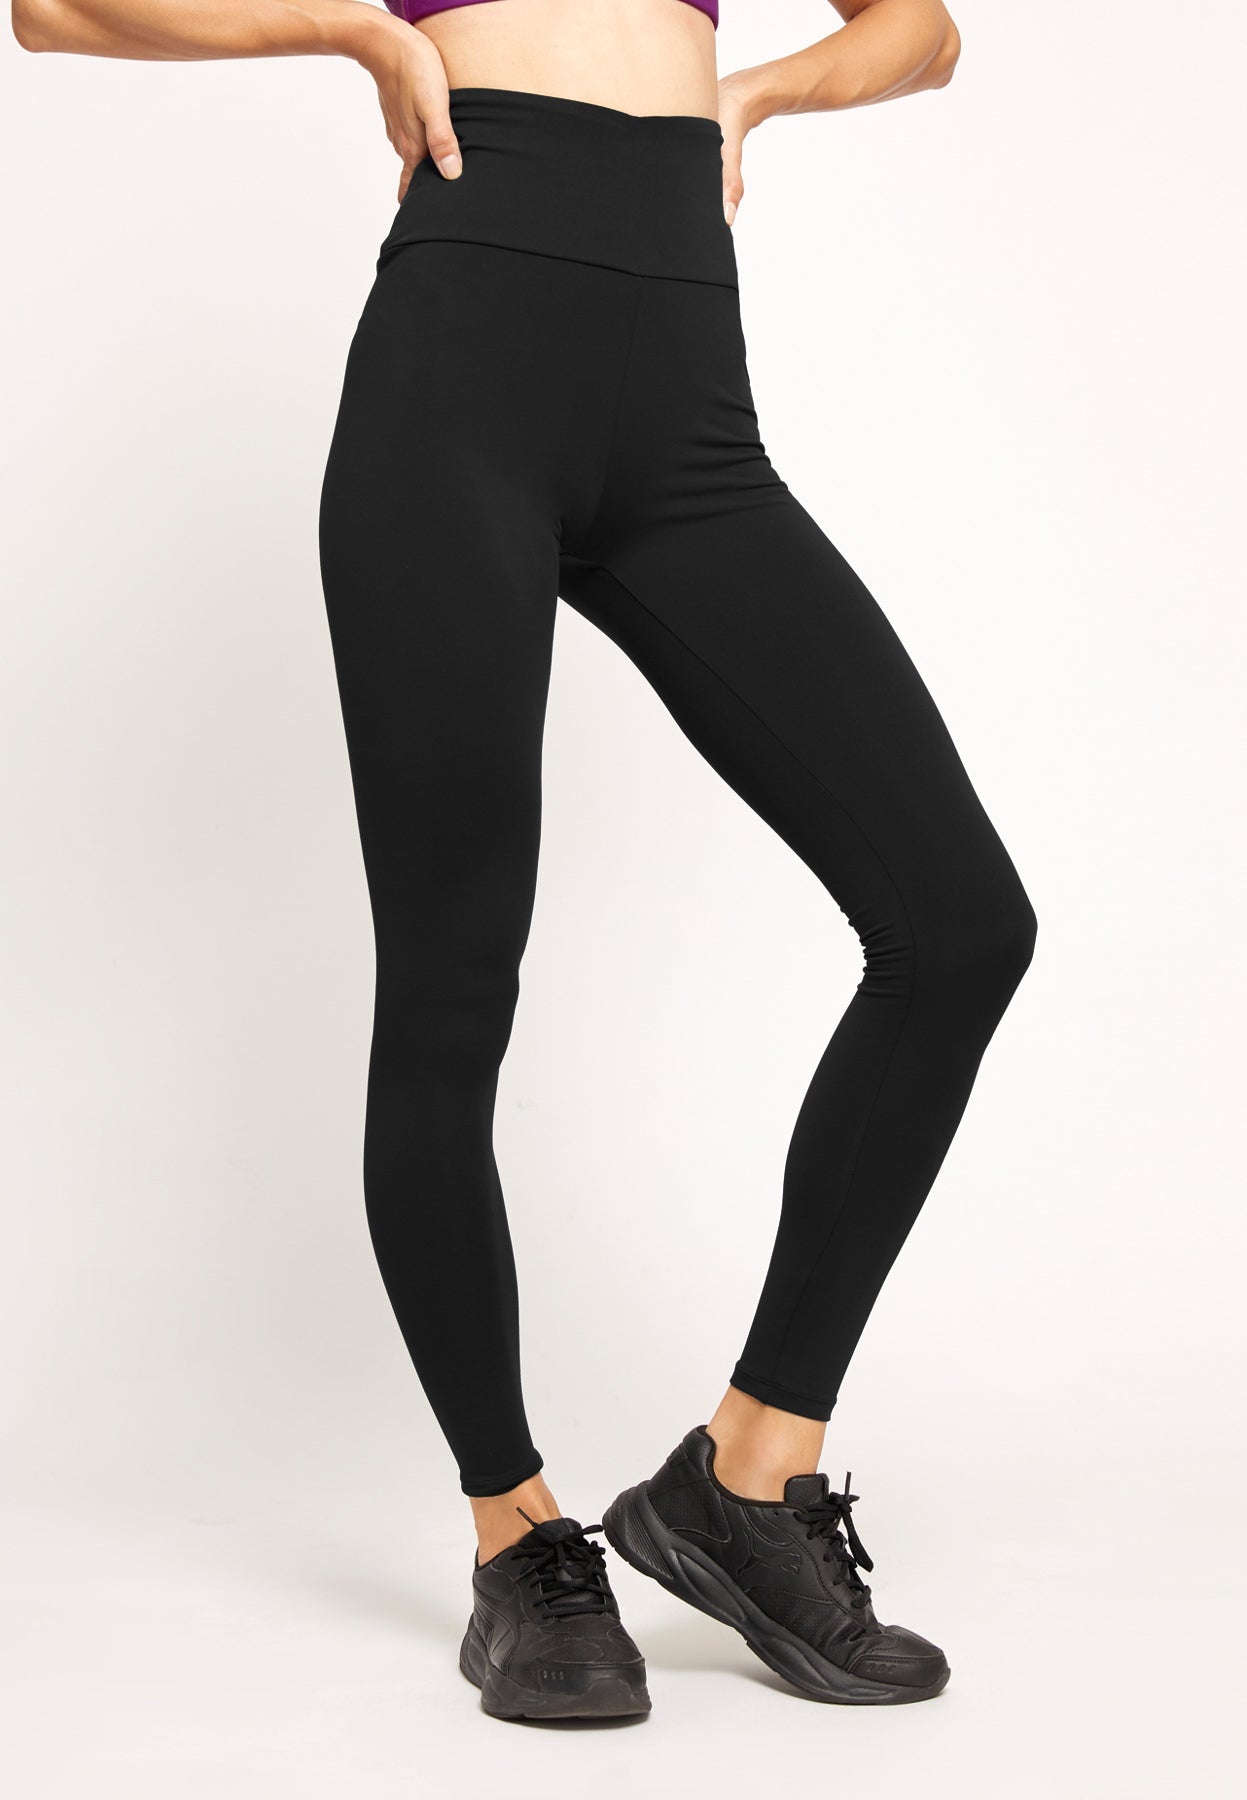 Top Notch Leggings (Black) – Athleiswim™, FUNFIT